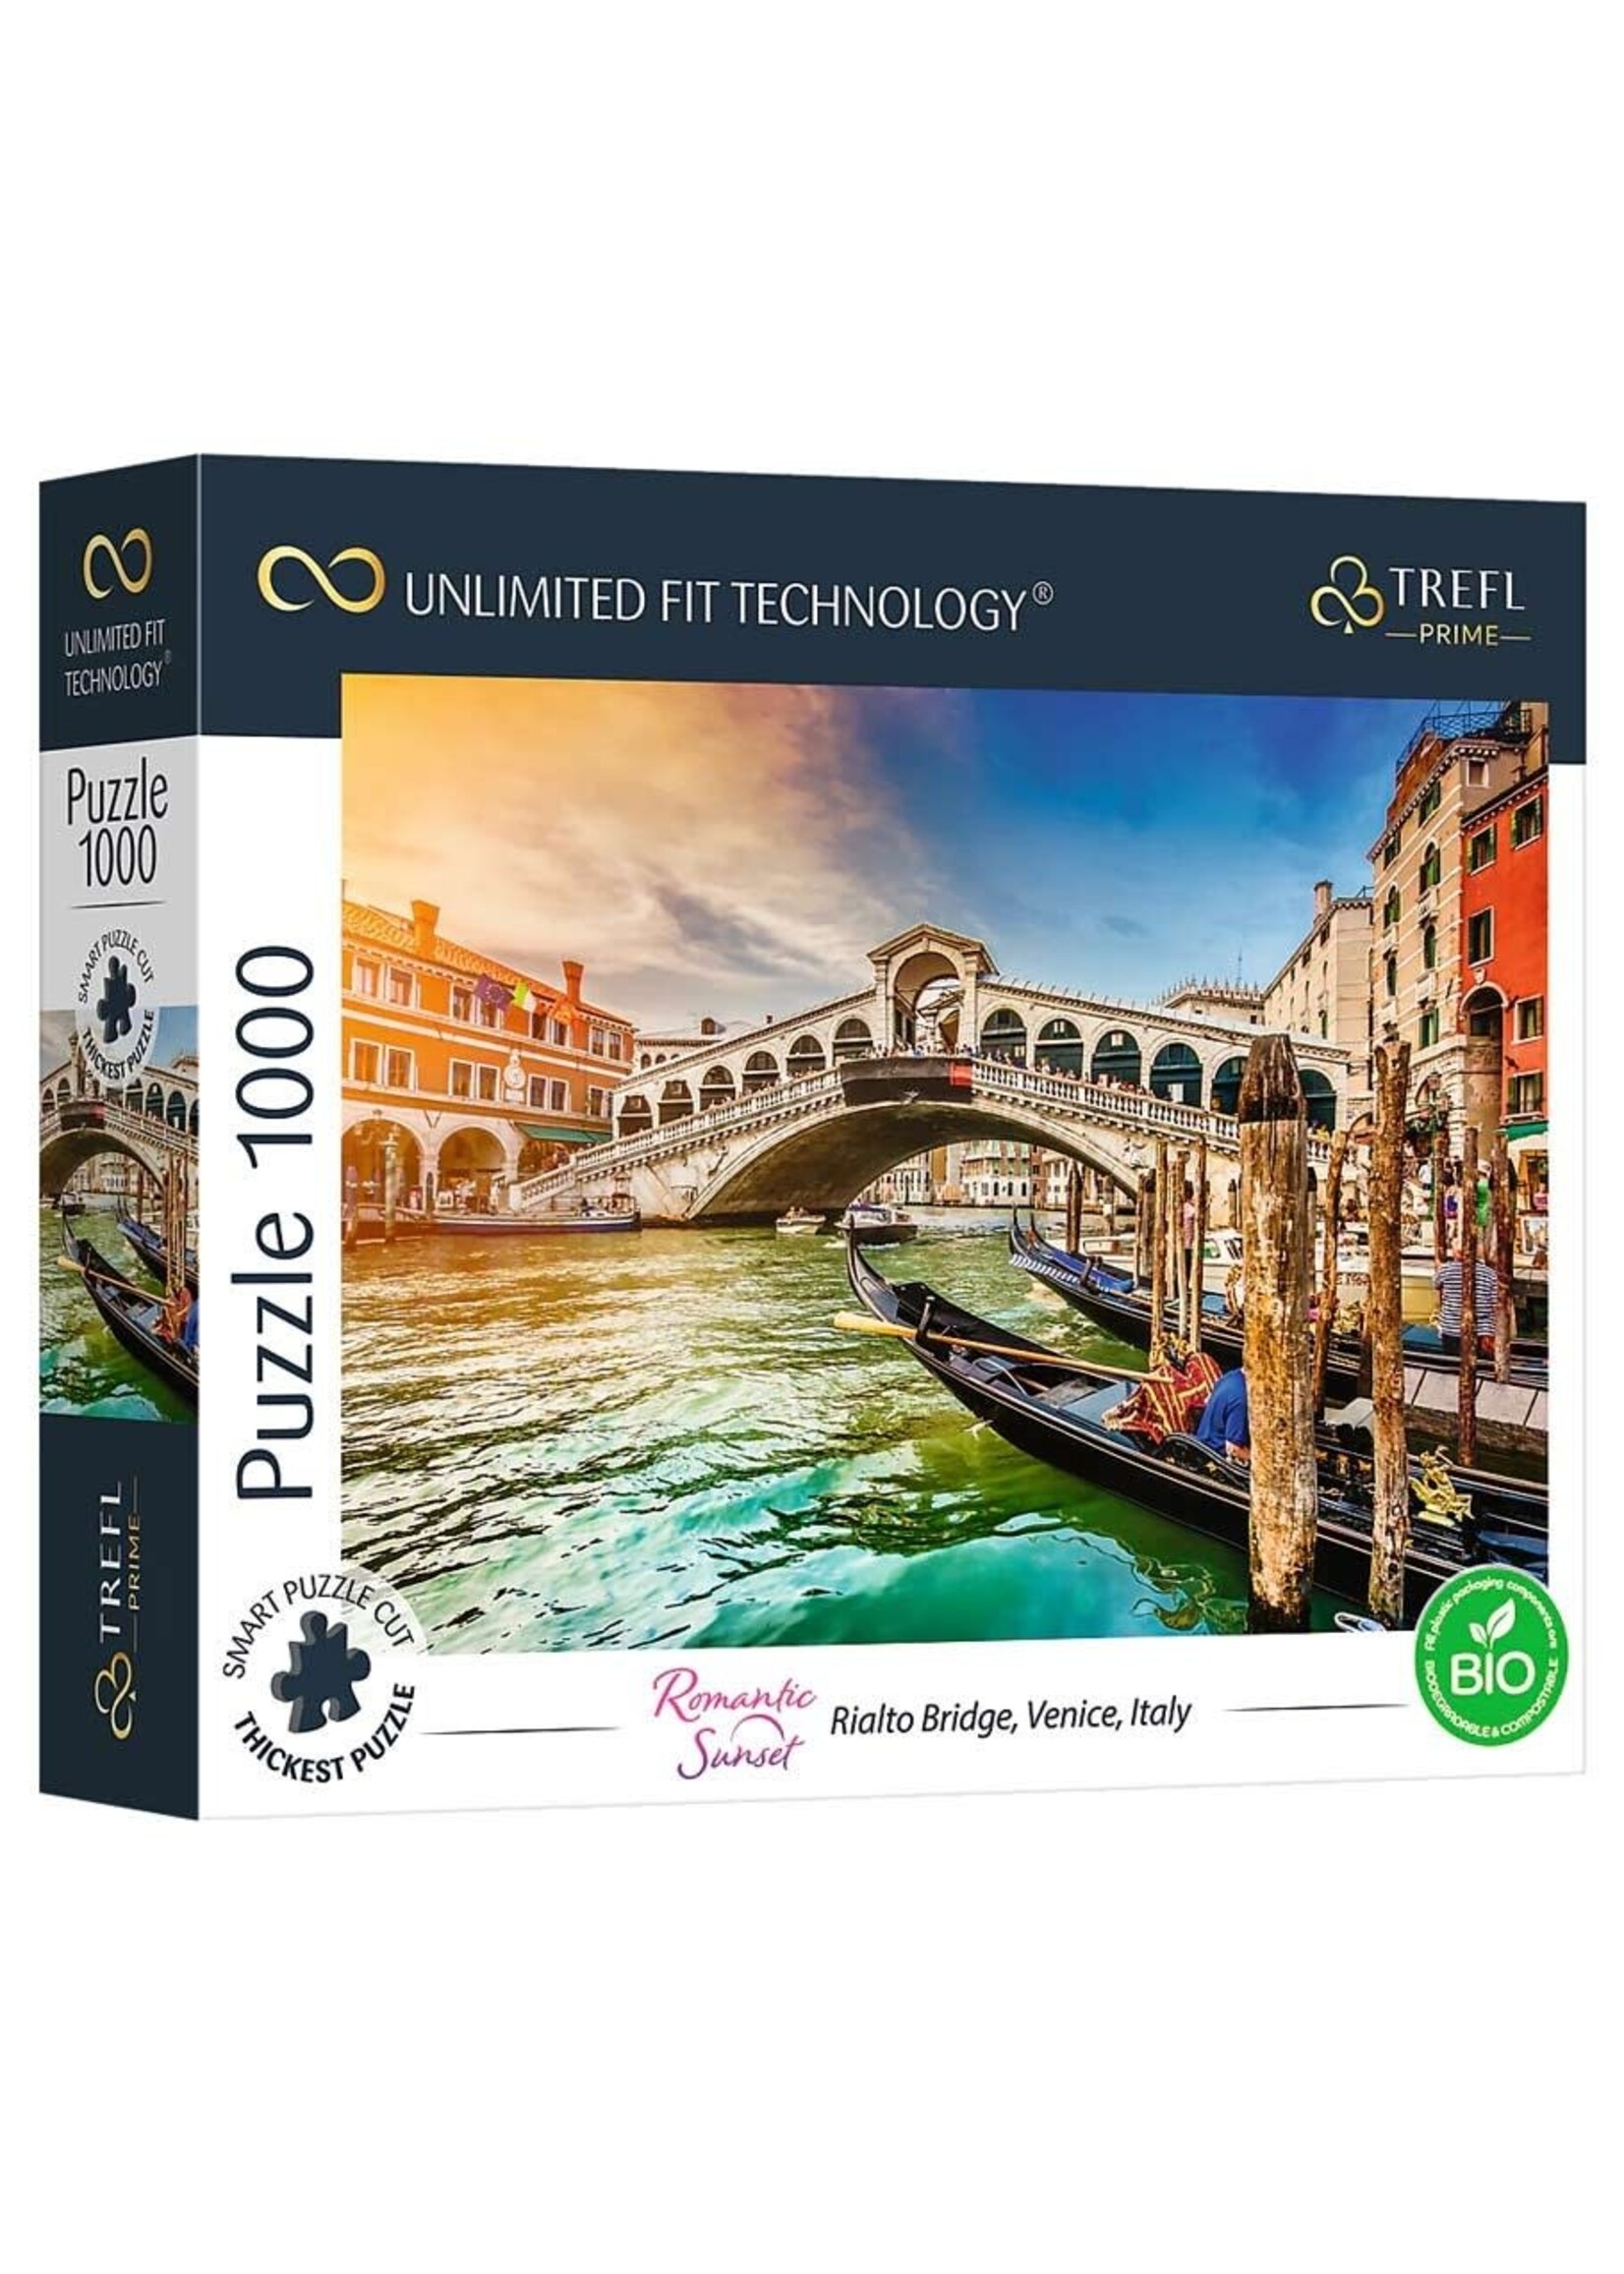 Trefl Unlimited Fit Puzzle: Romantic Rialto Bridge 1000pc